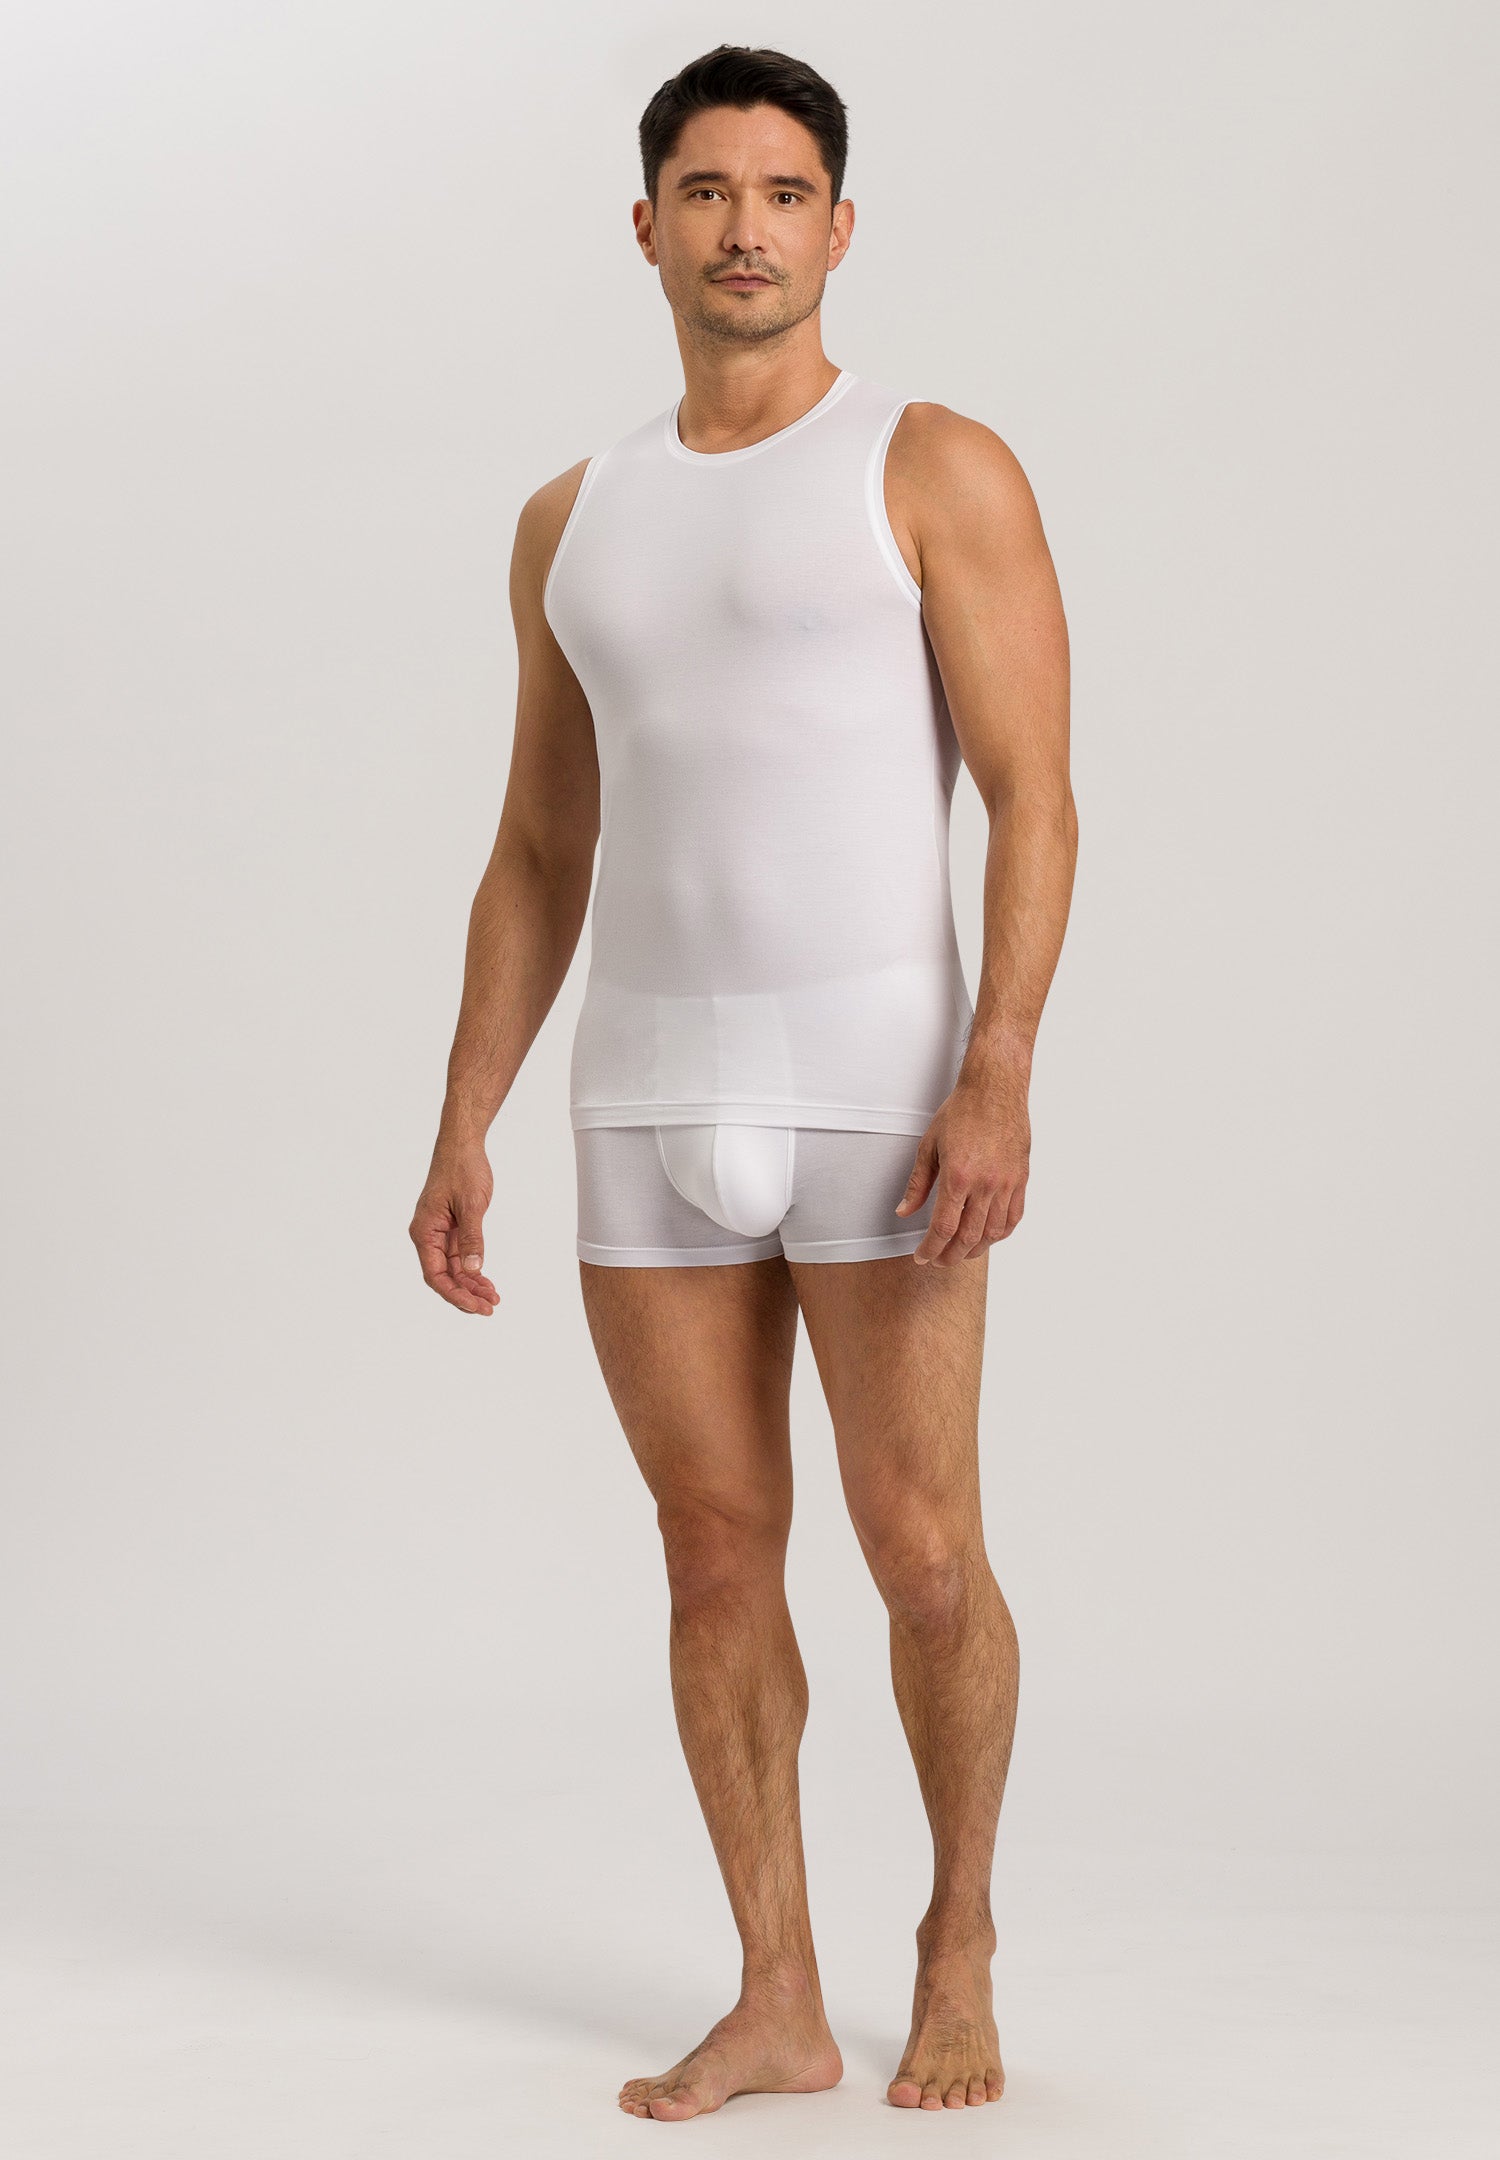 73098 Cotton Superior Sleeveless Tshirt - 101 White